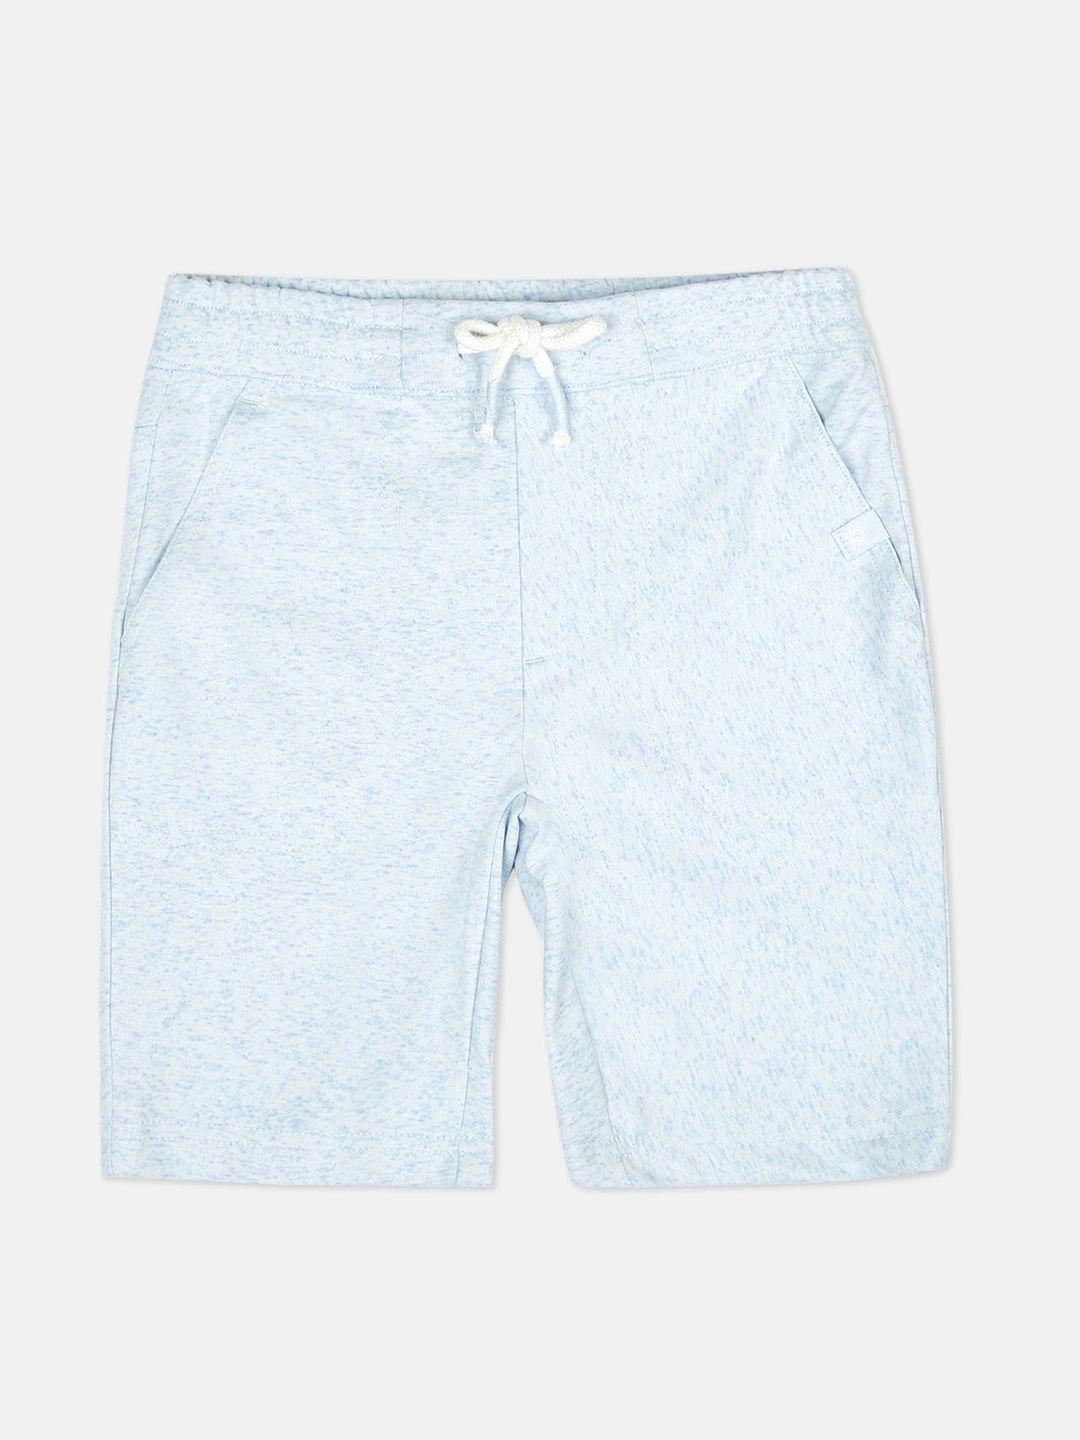 united-colors-of-benetton-boys-blue-shorts